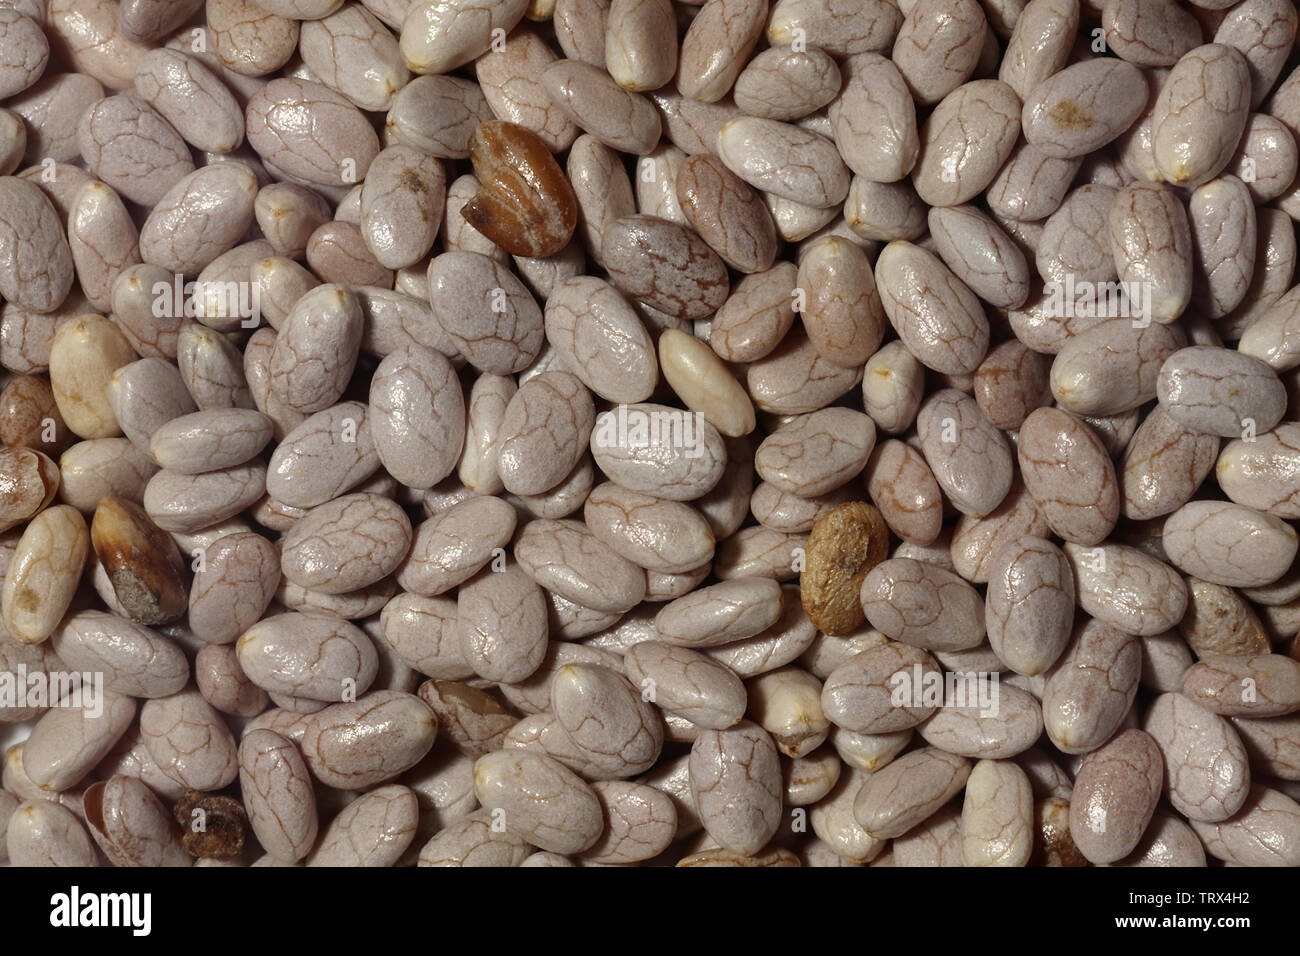 White Chia - semillas de Salvia hispanica - Salvia columbariae - Cerrar Macro - alta en proteína, fibra, potasio, hierro, calcio y magnesio Foto de stock